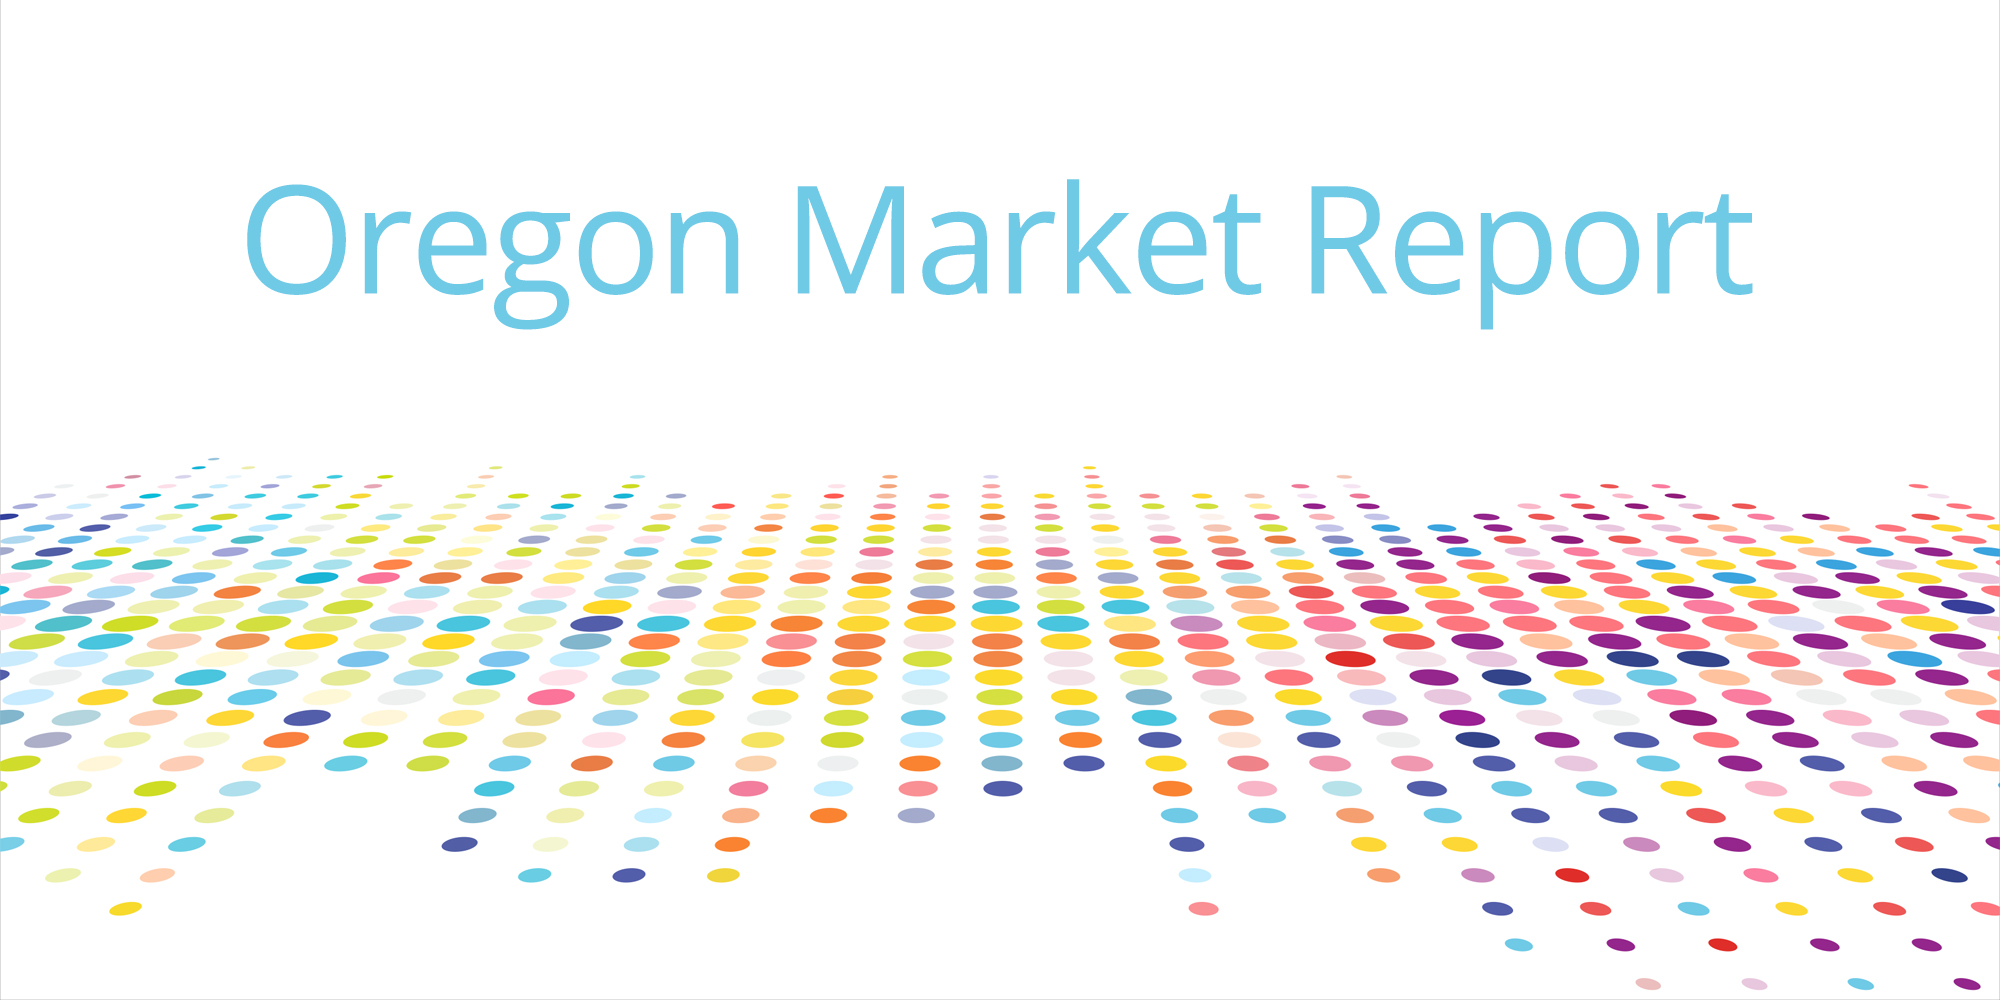 oregon cannabis market report cannabis wholesale